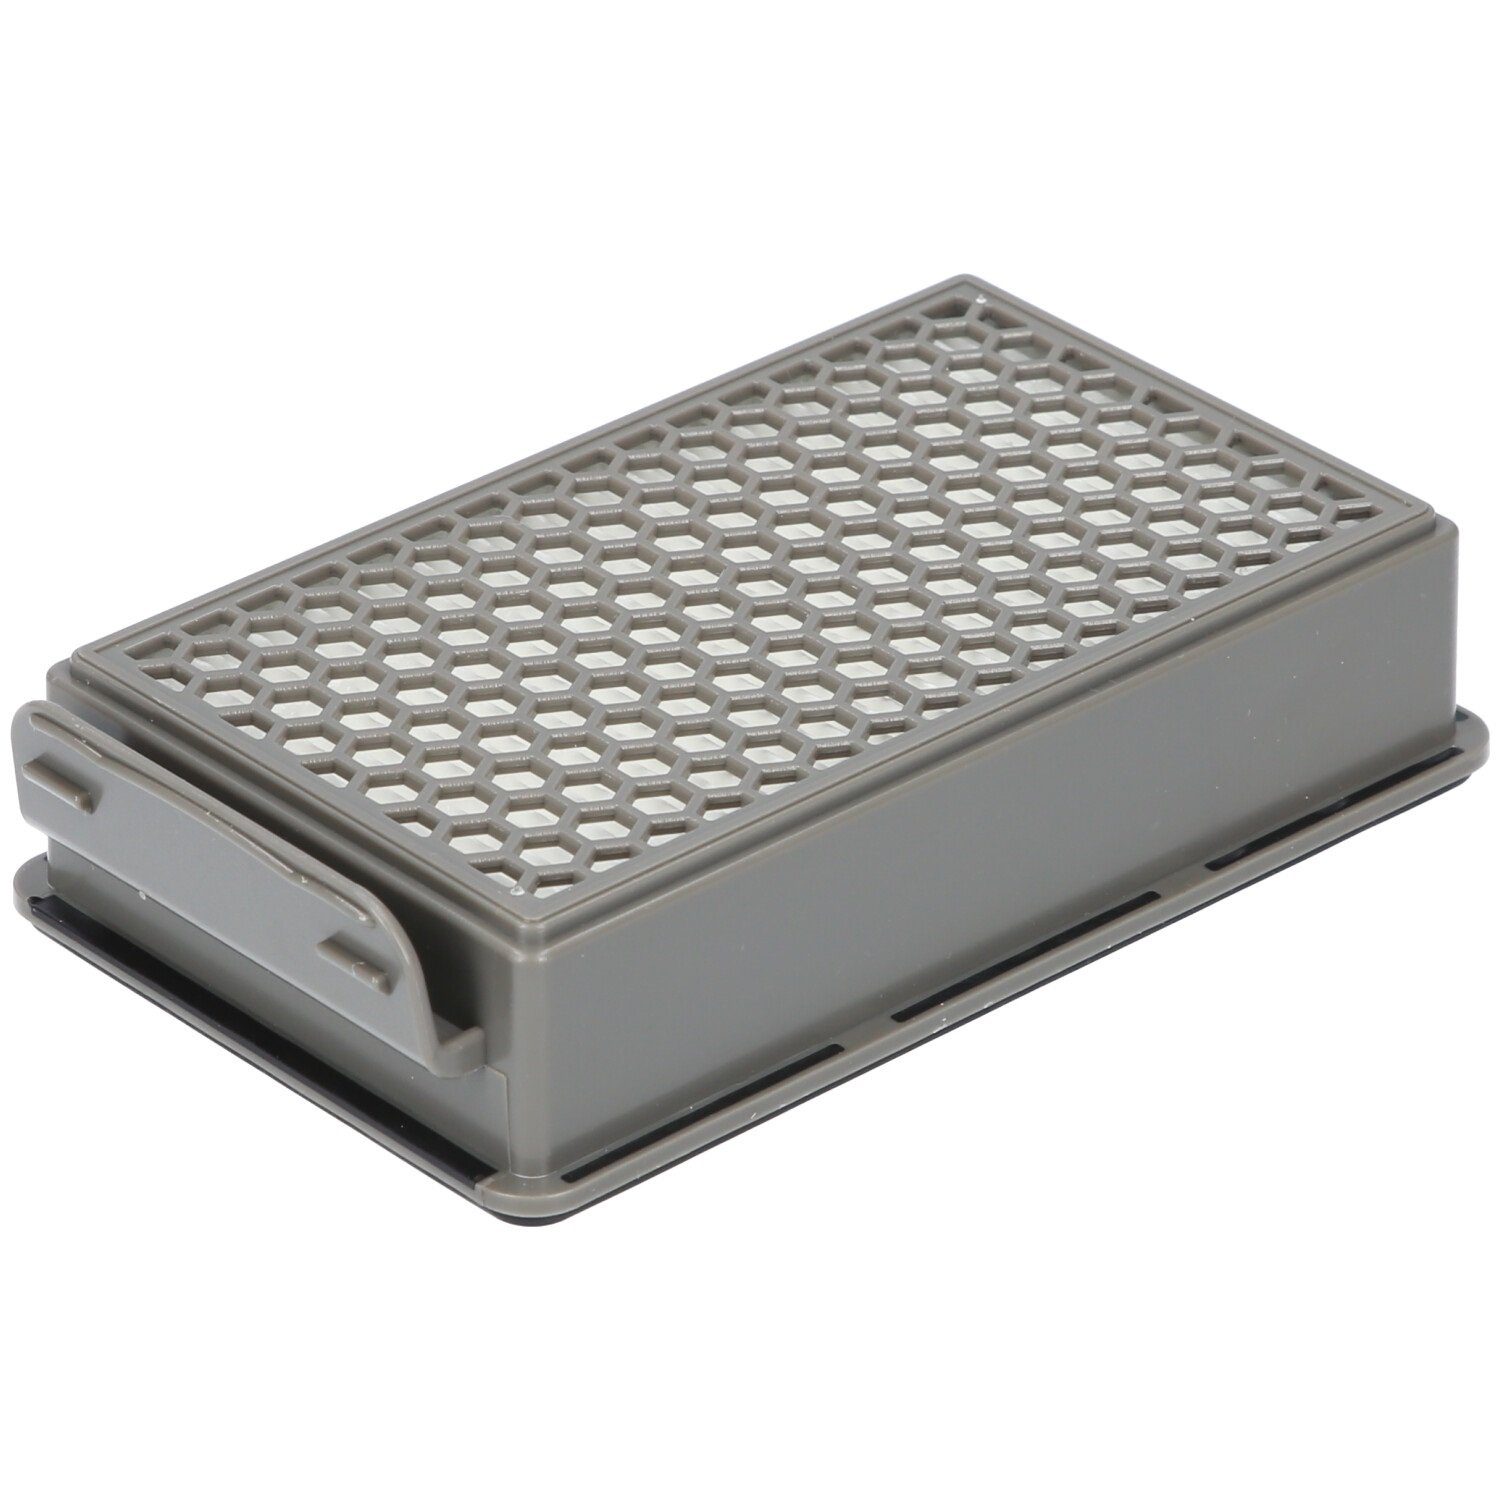 TW3931EA, für 2x Rundfilter, TW3953EA, TW3969EA, 2x Alternative Tefal Filter-Set TW3985EA,TW3999EA, für ZR005901 Filterkassette, McFilter geeignet